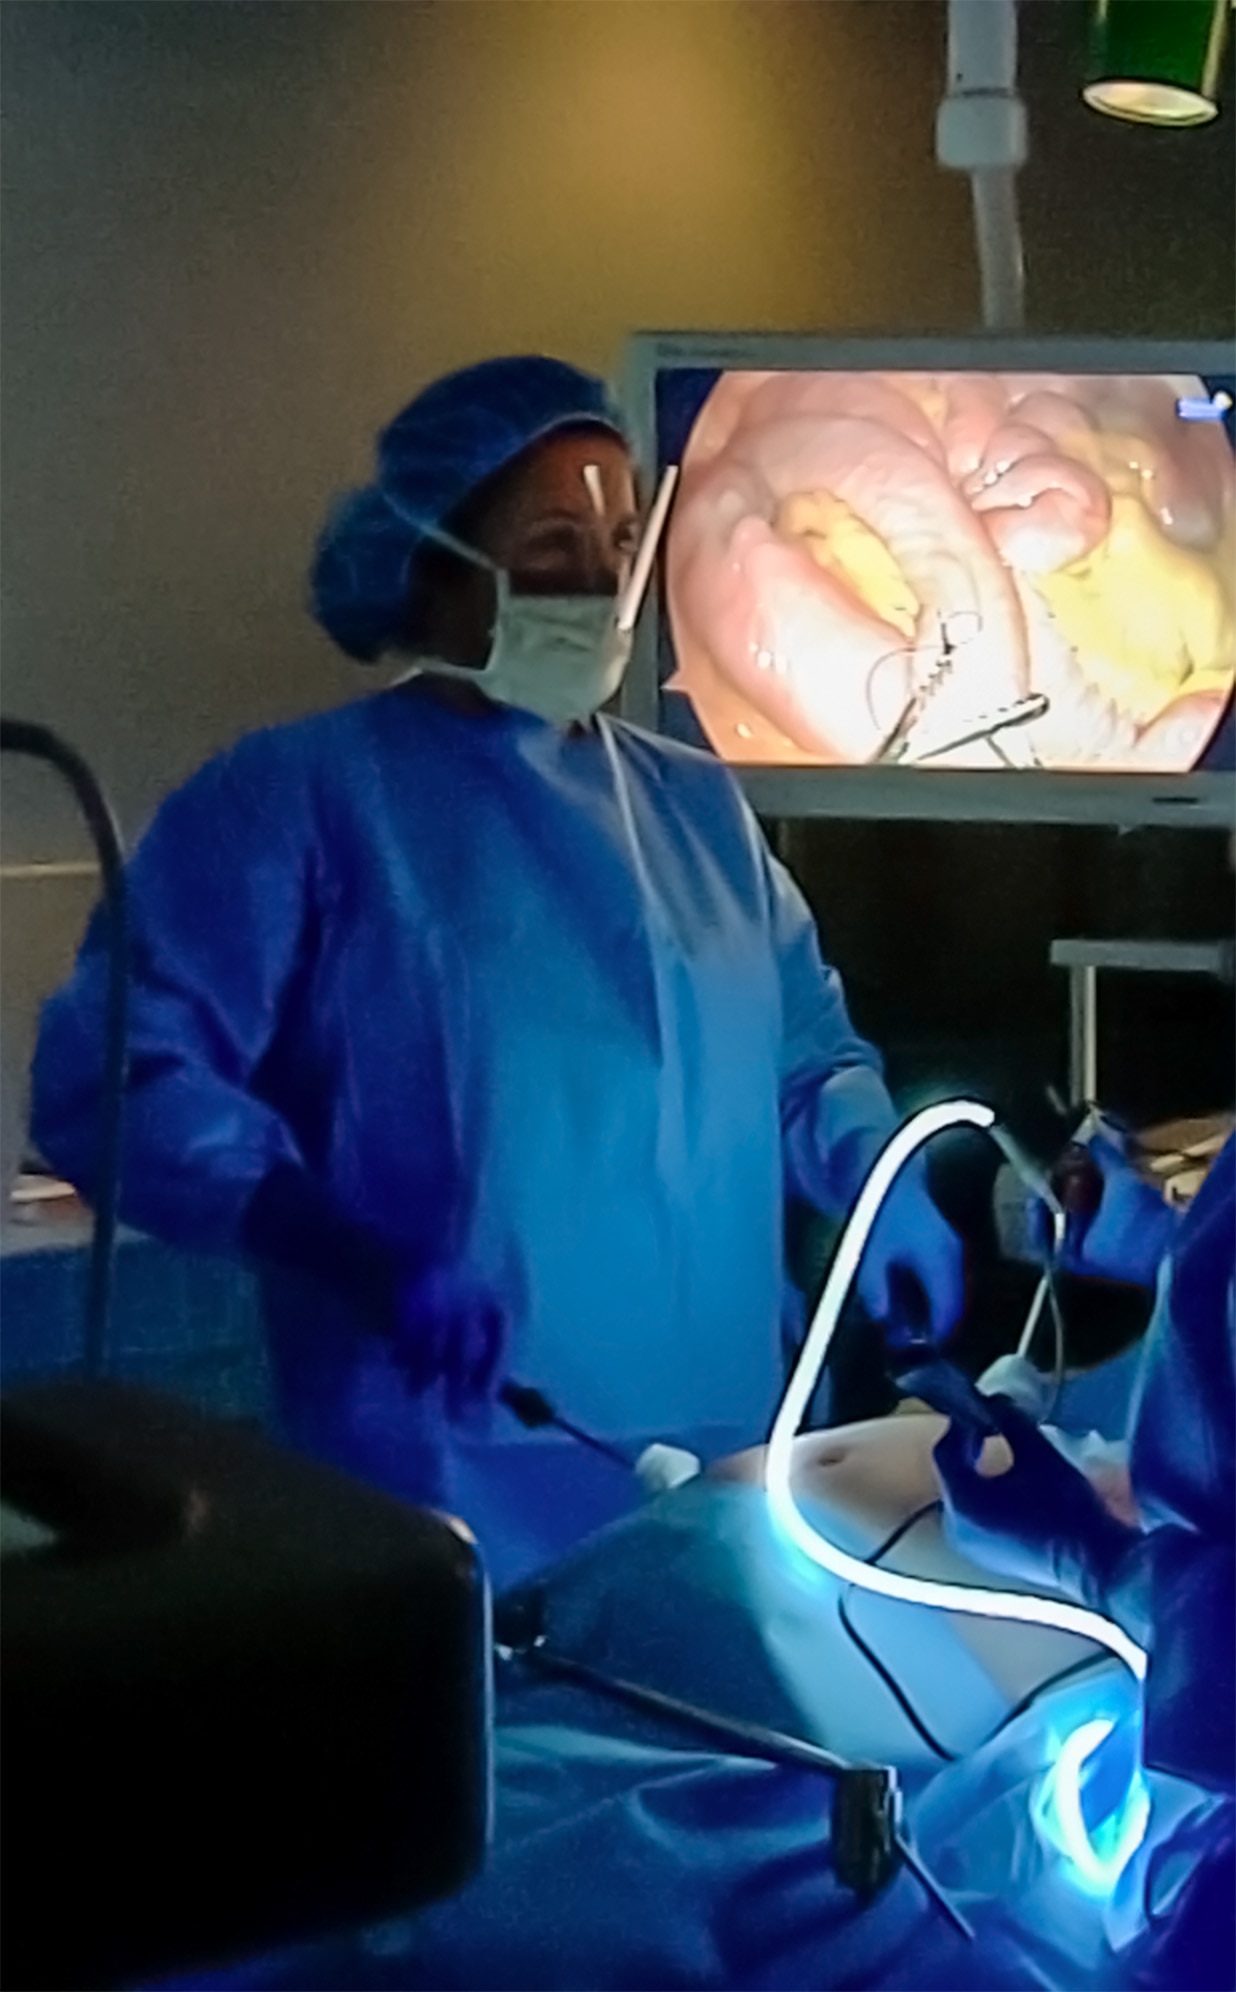 A surgeon performs an abdominal laparoscopic surgery